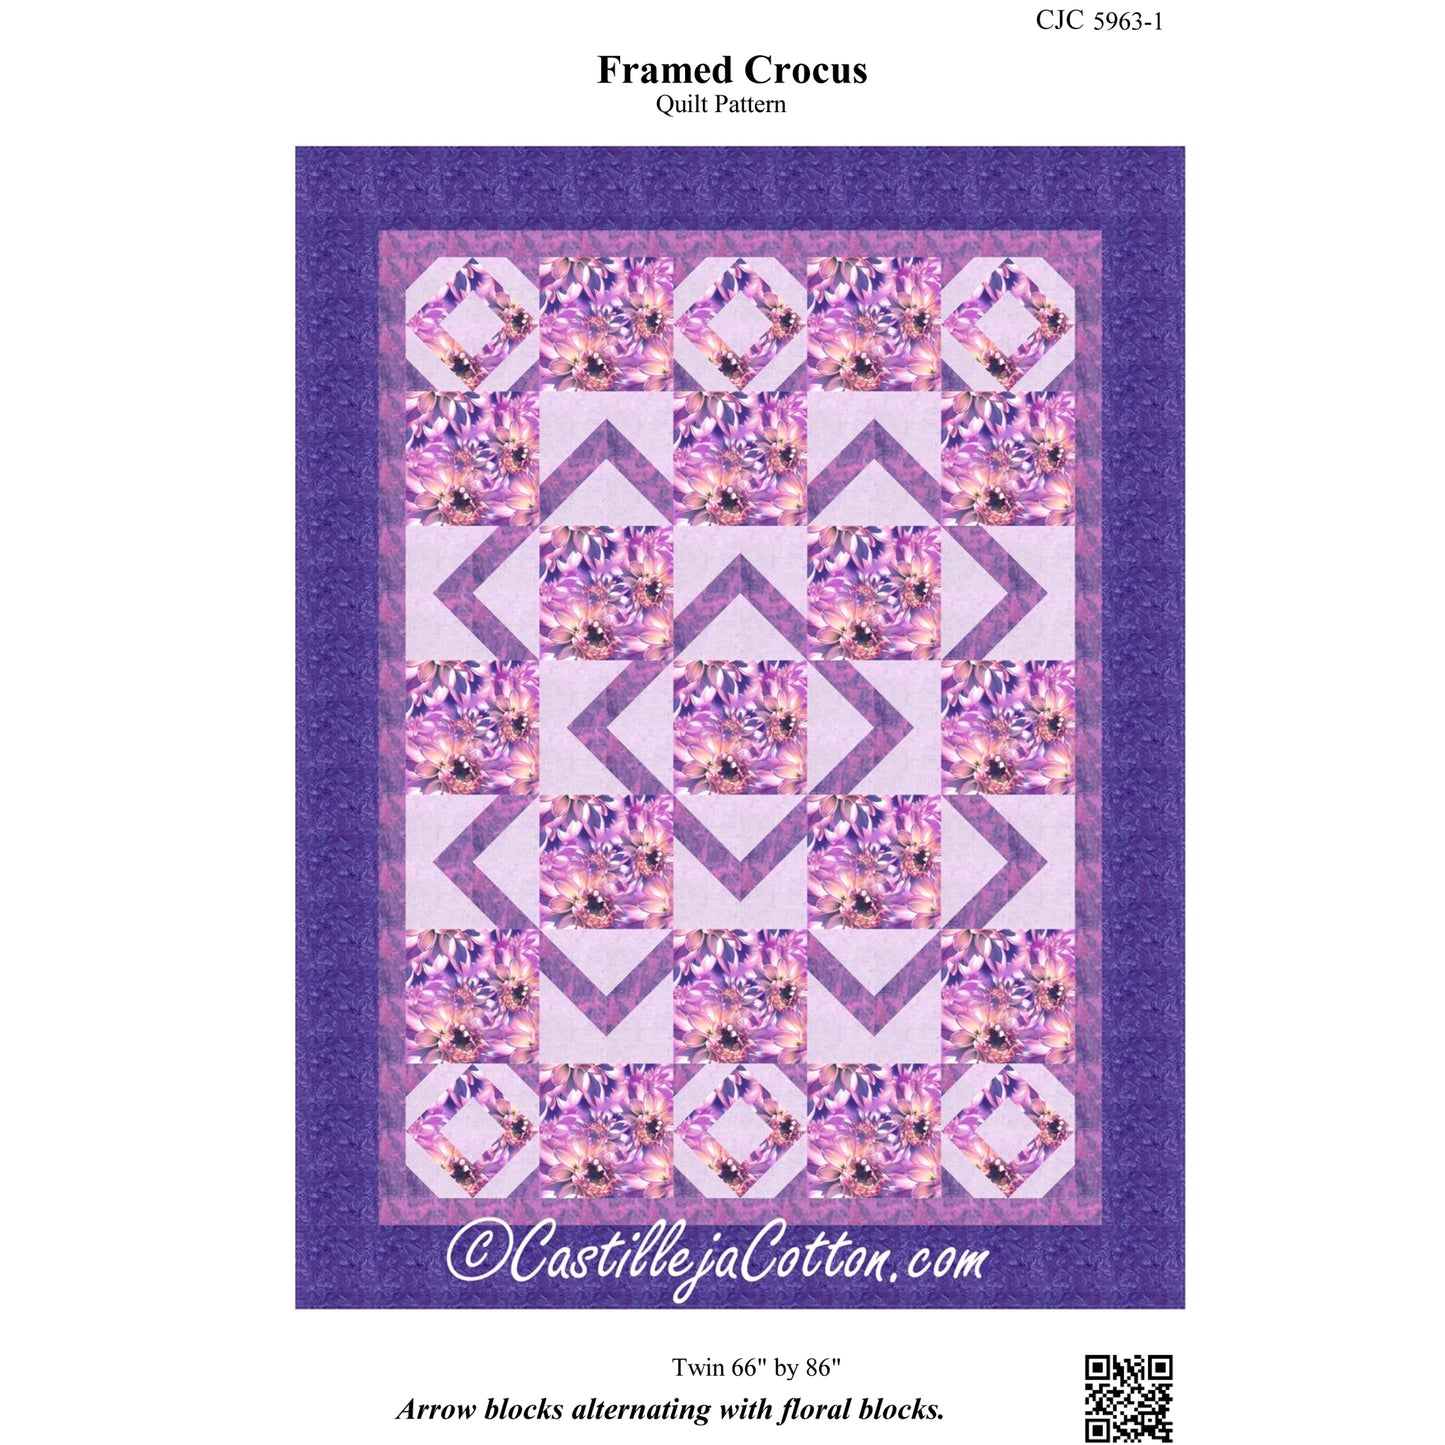 Cover image of pattern for Framed Crocus quilt.